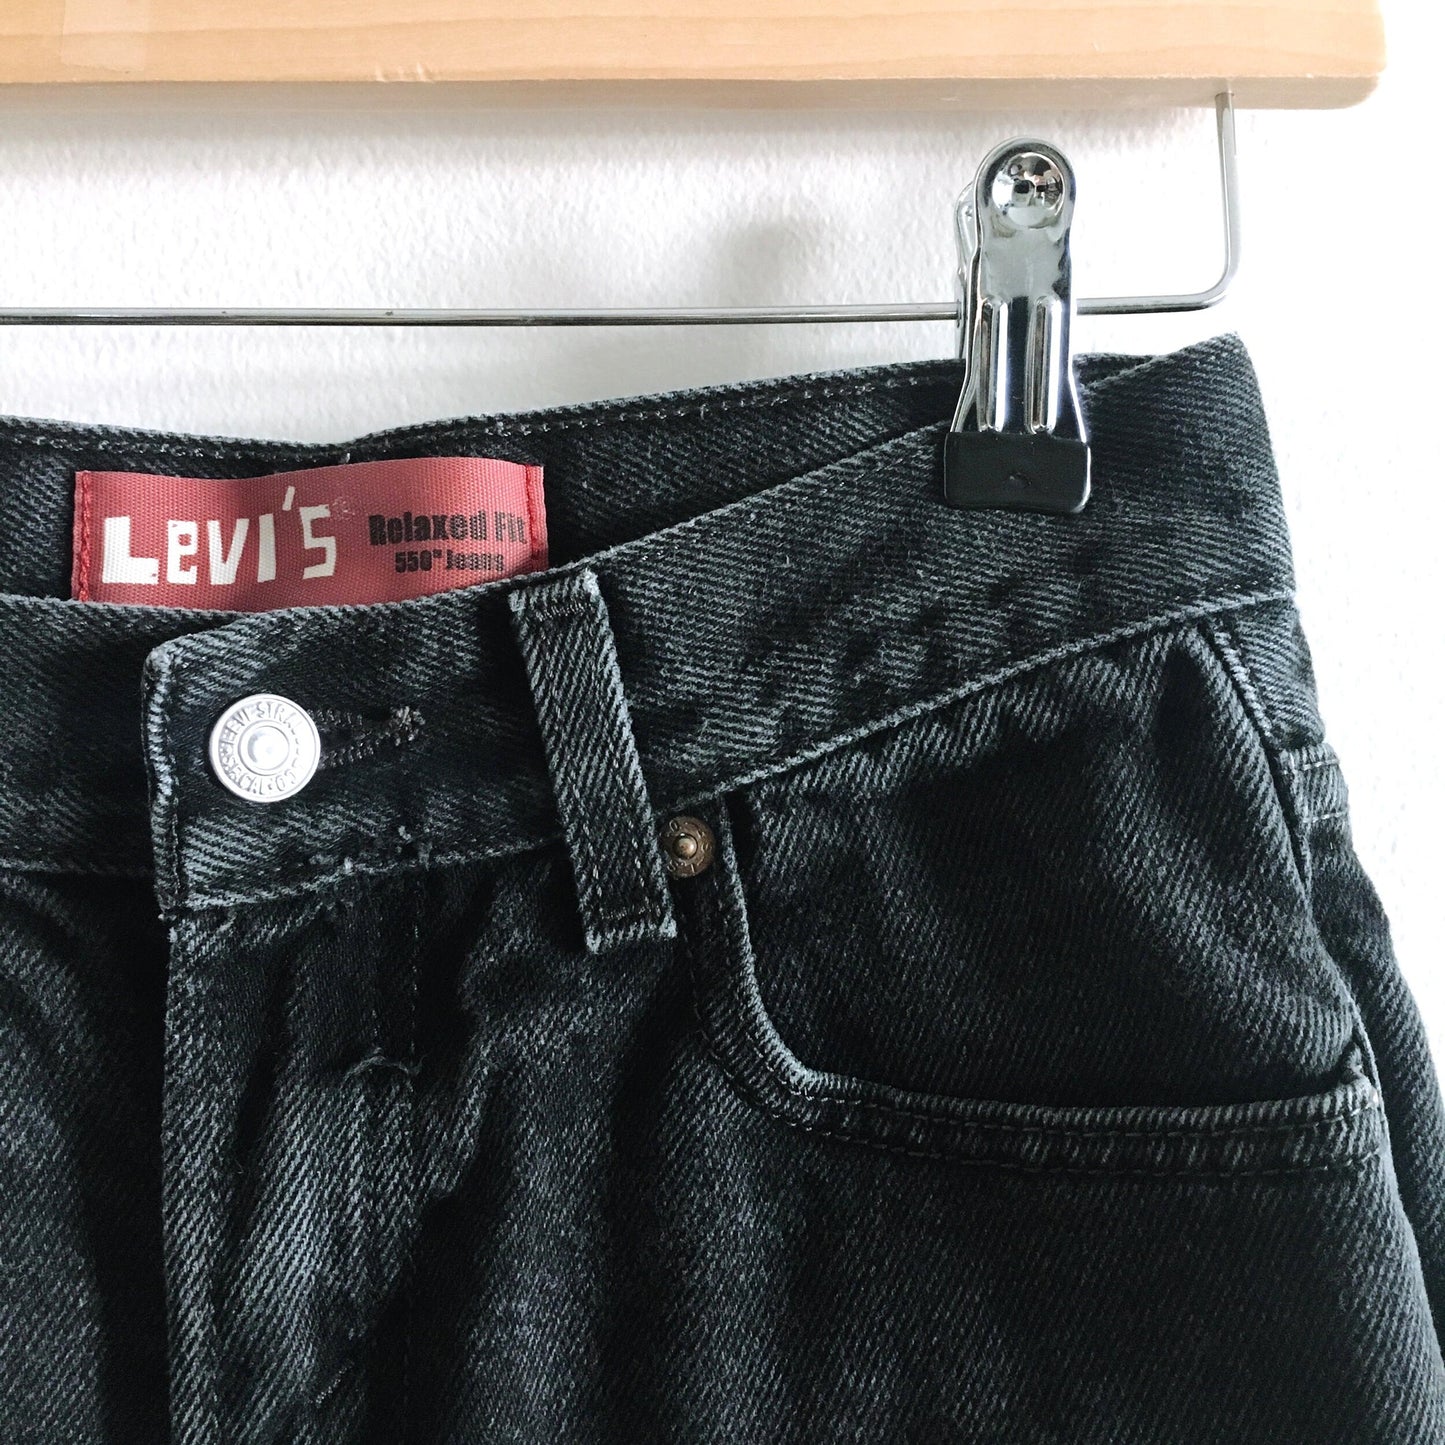 Levi's 550 high rise rolled hem shorts - size 25